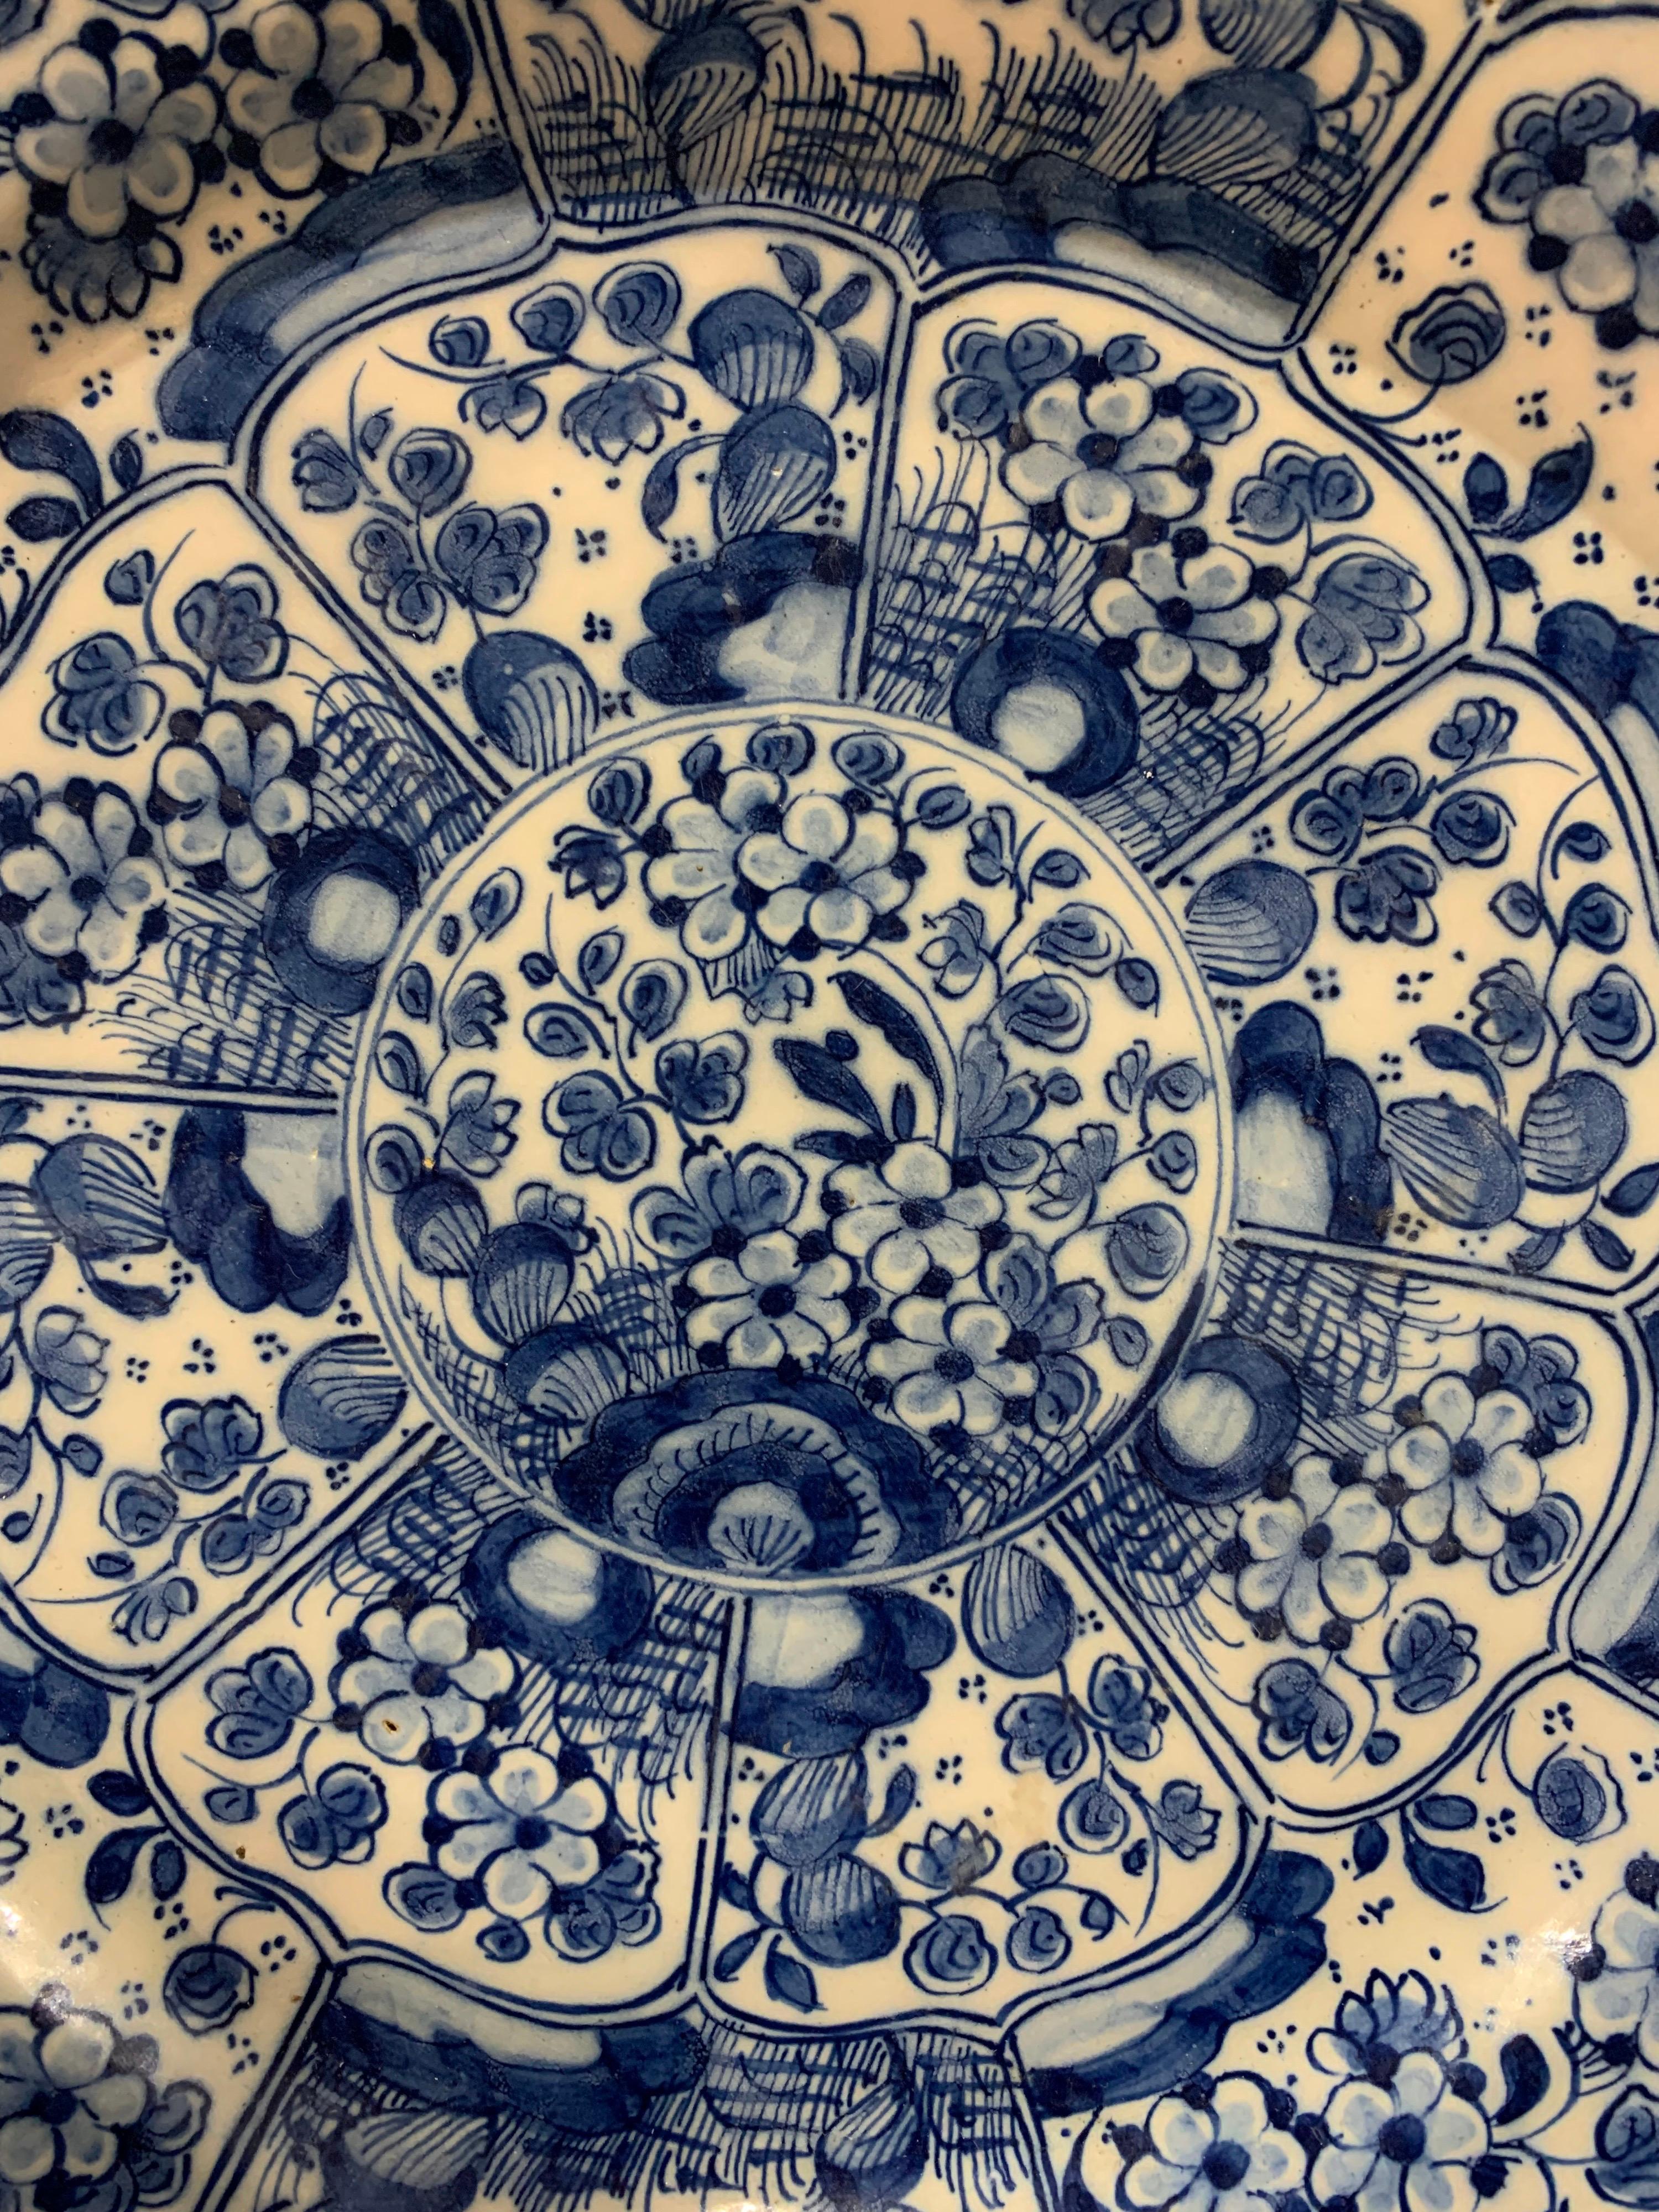 18th-19th century hand painted Delft platter, 12 1/8” diameter.